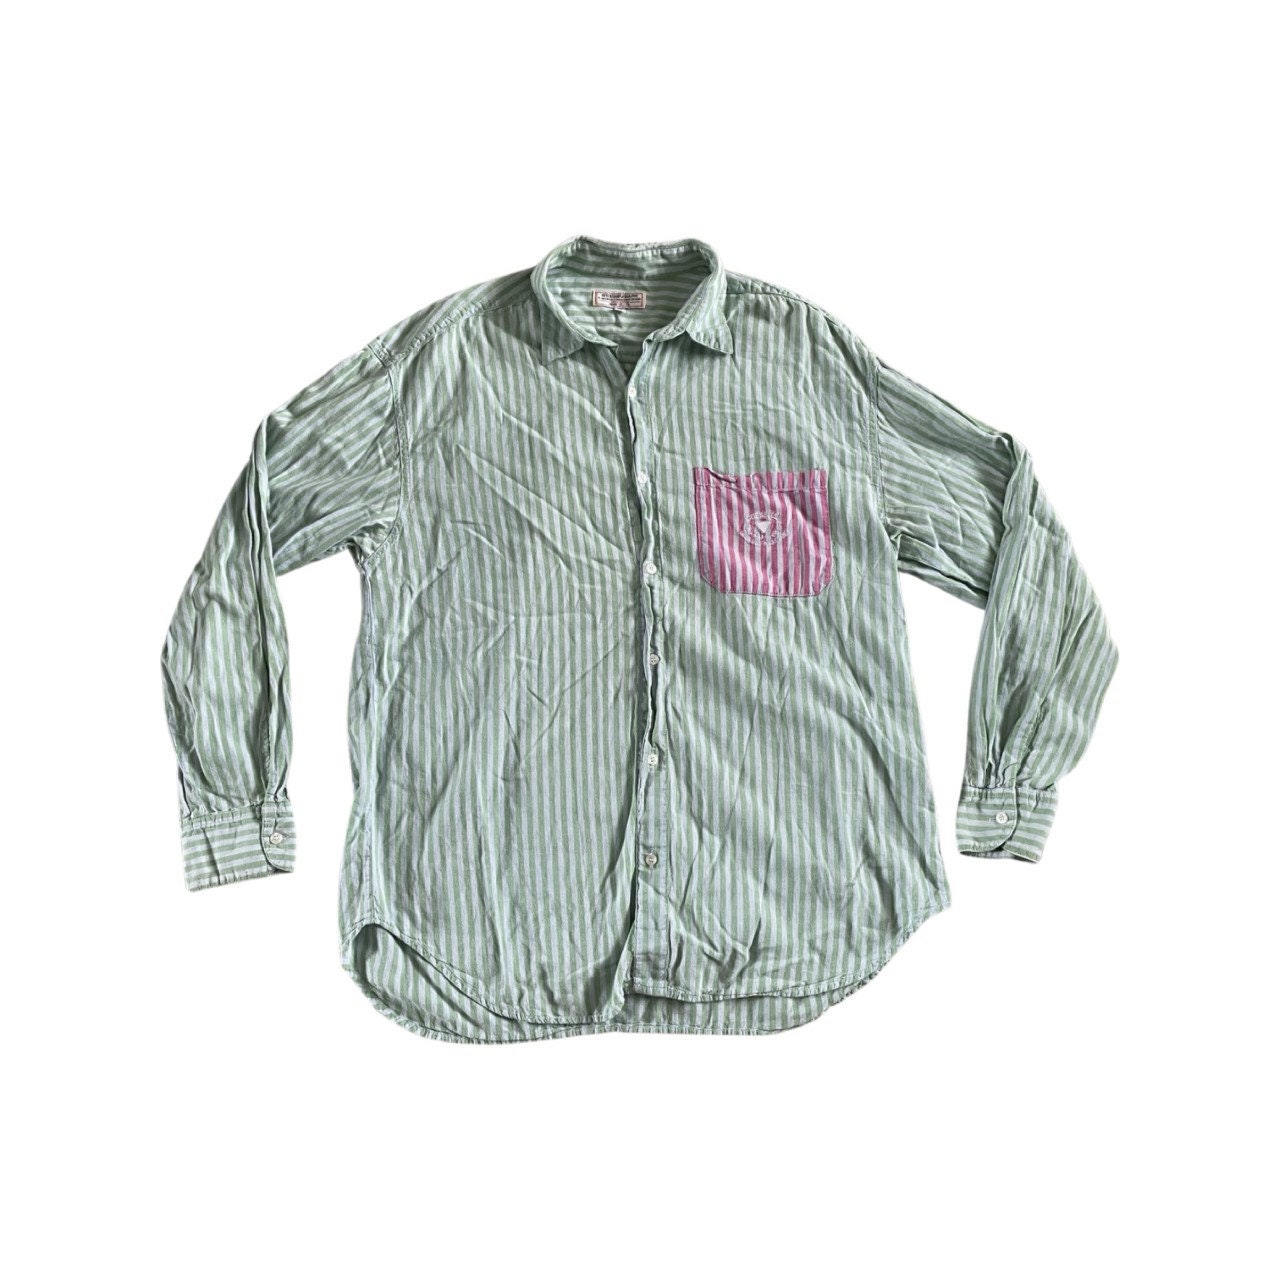 Hutspah Mens Vintage Casual Button Down Shirt Short Sleeve